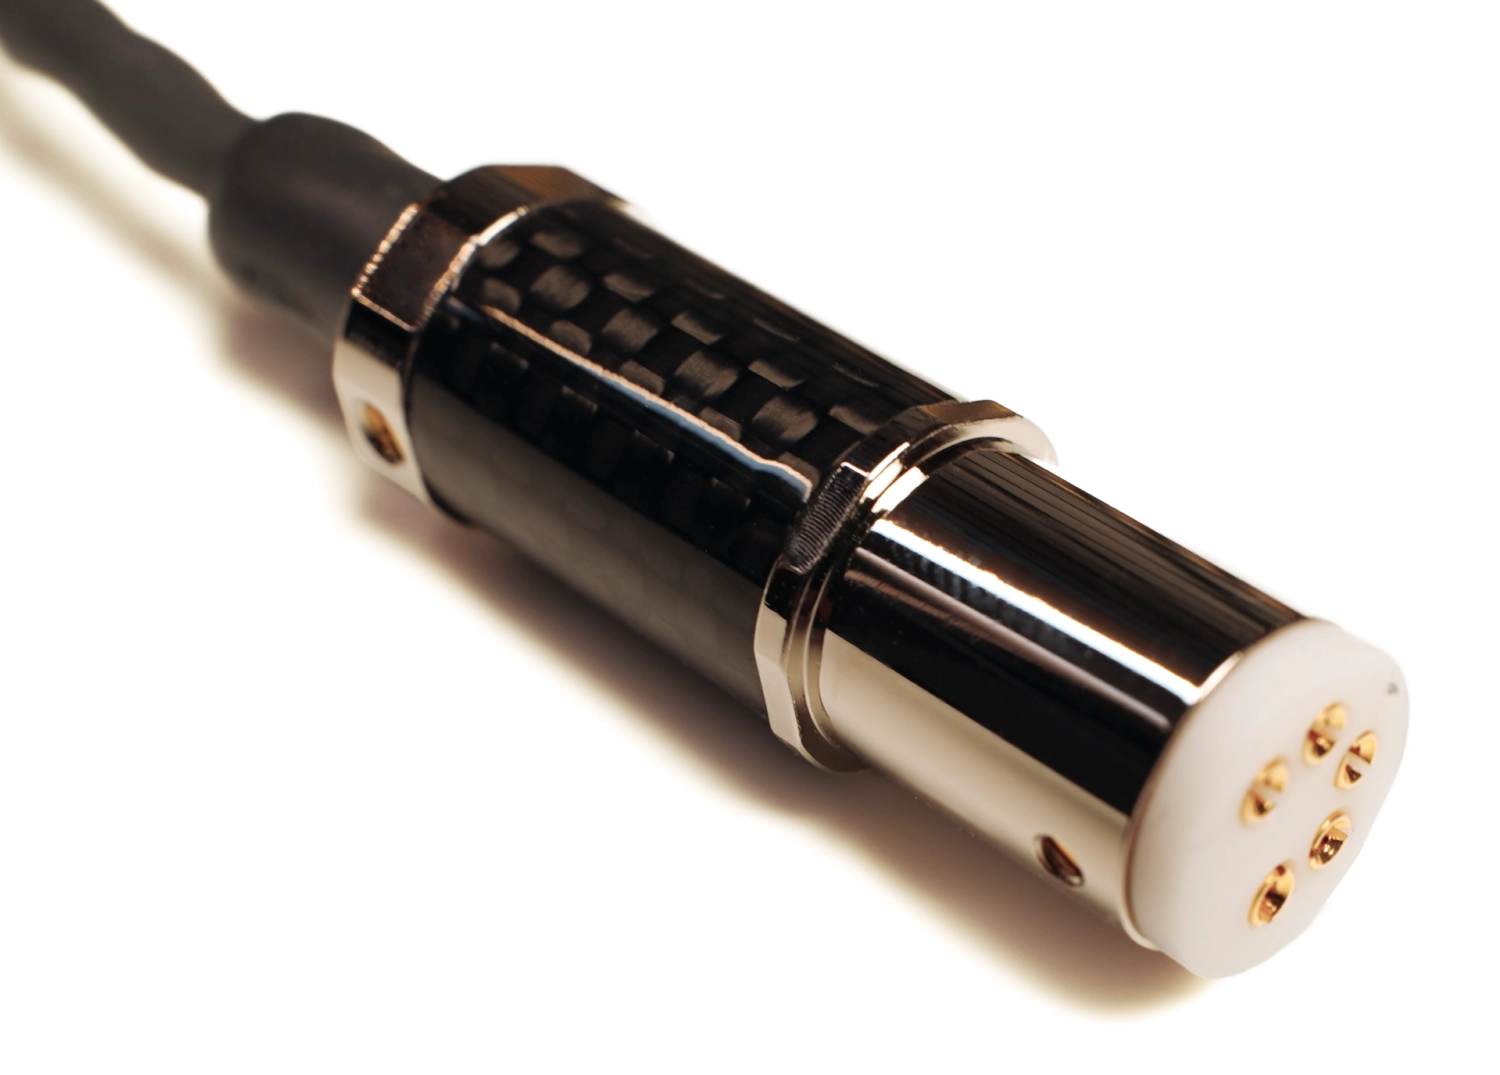 5 Pol. DIN Plug of MK Analogue phono cable